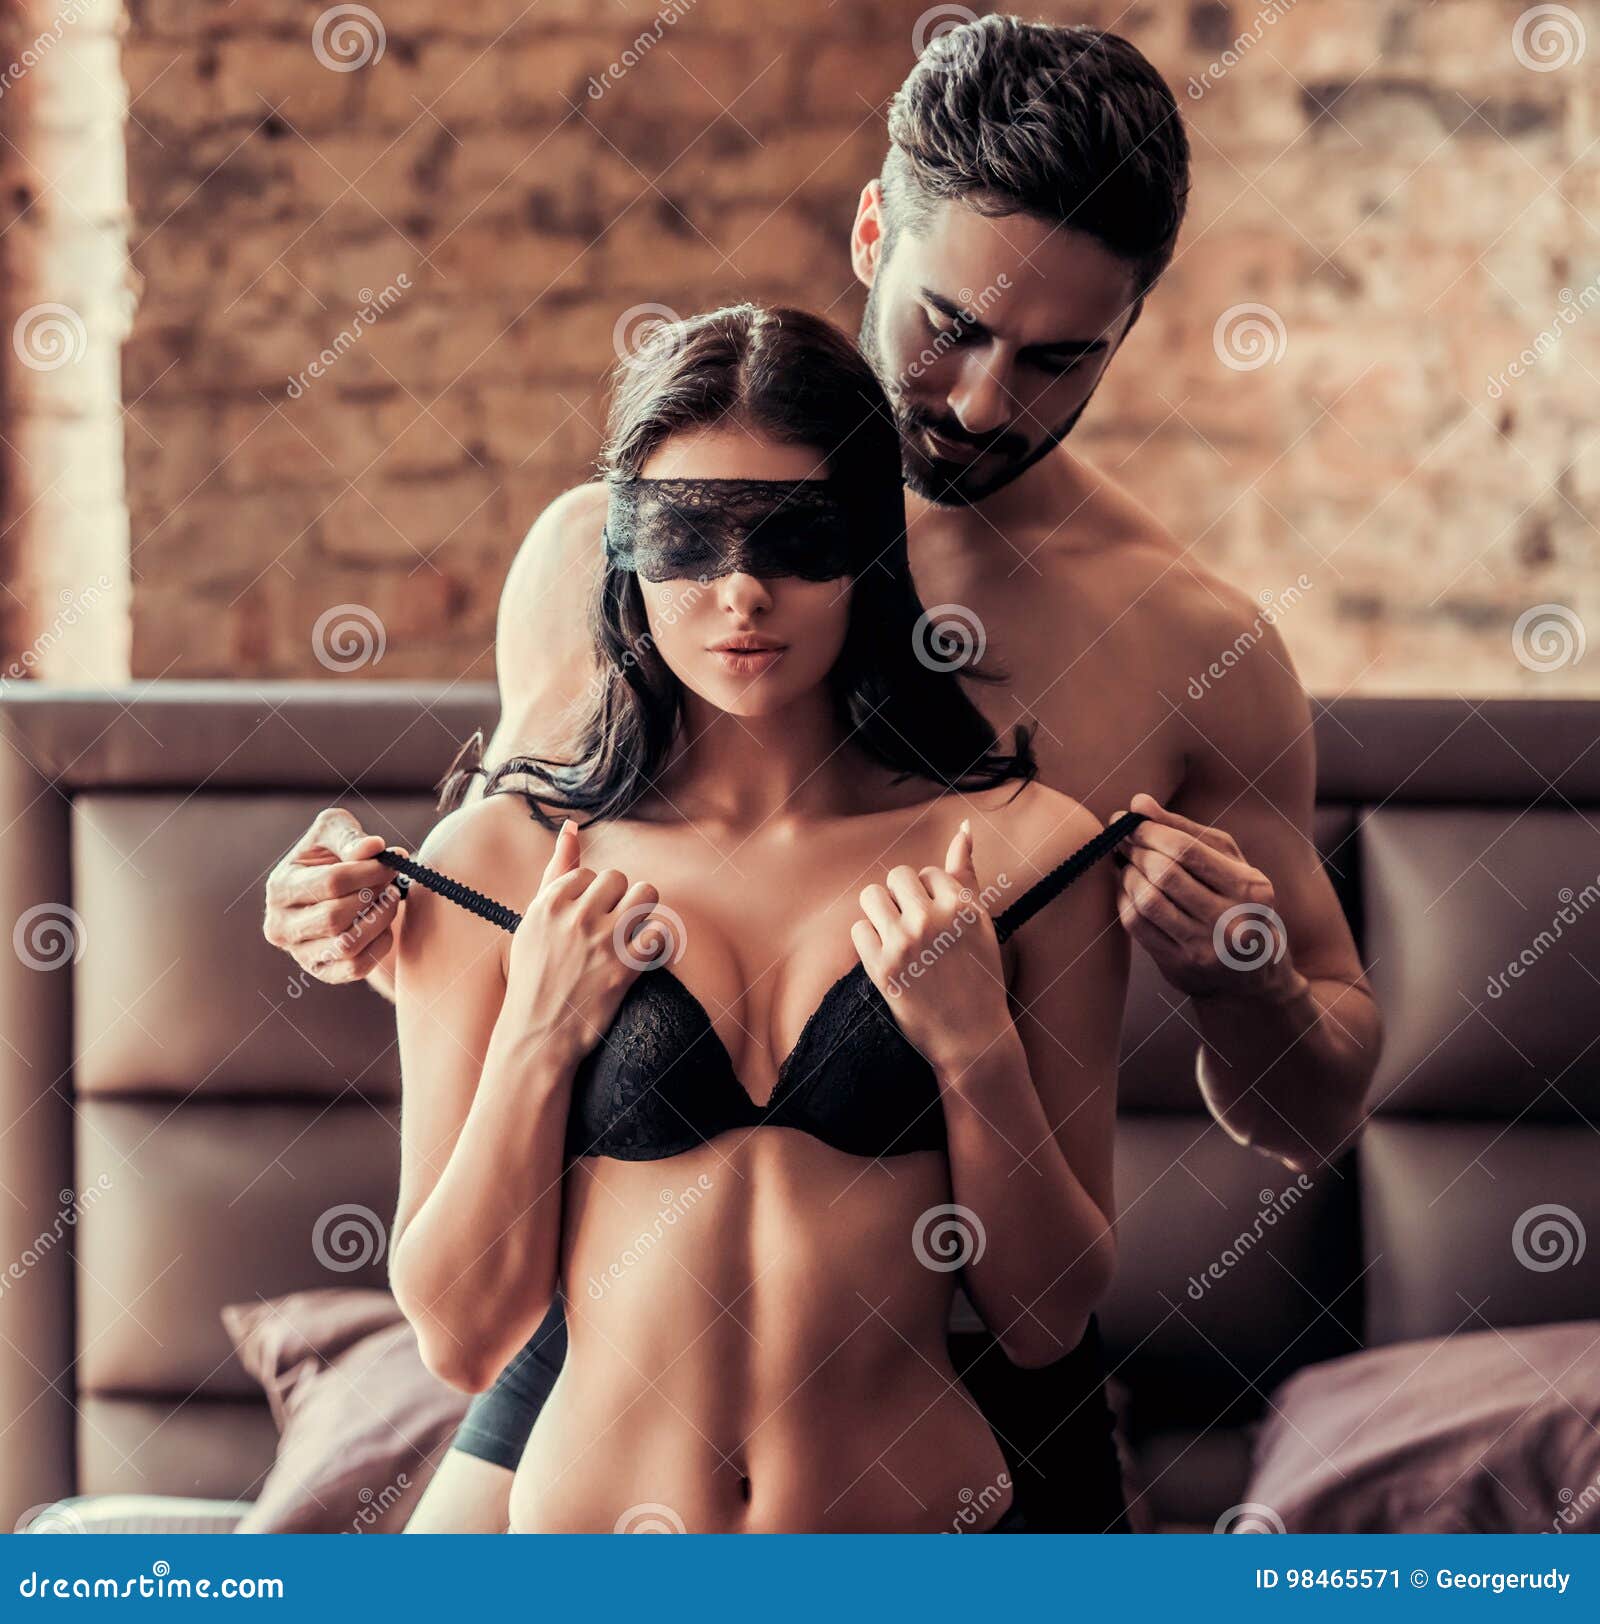 Couple having sex stock image. Image of caucasian, boyfriend - 98465571